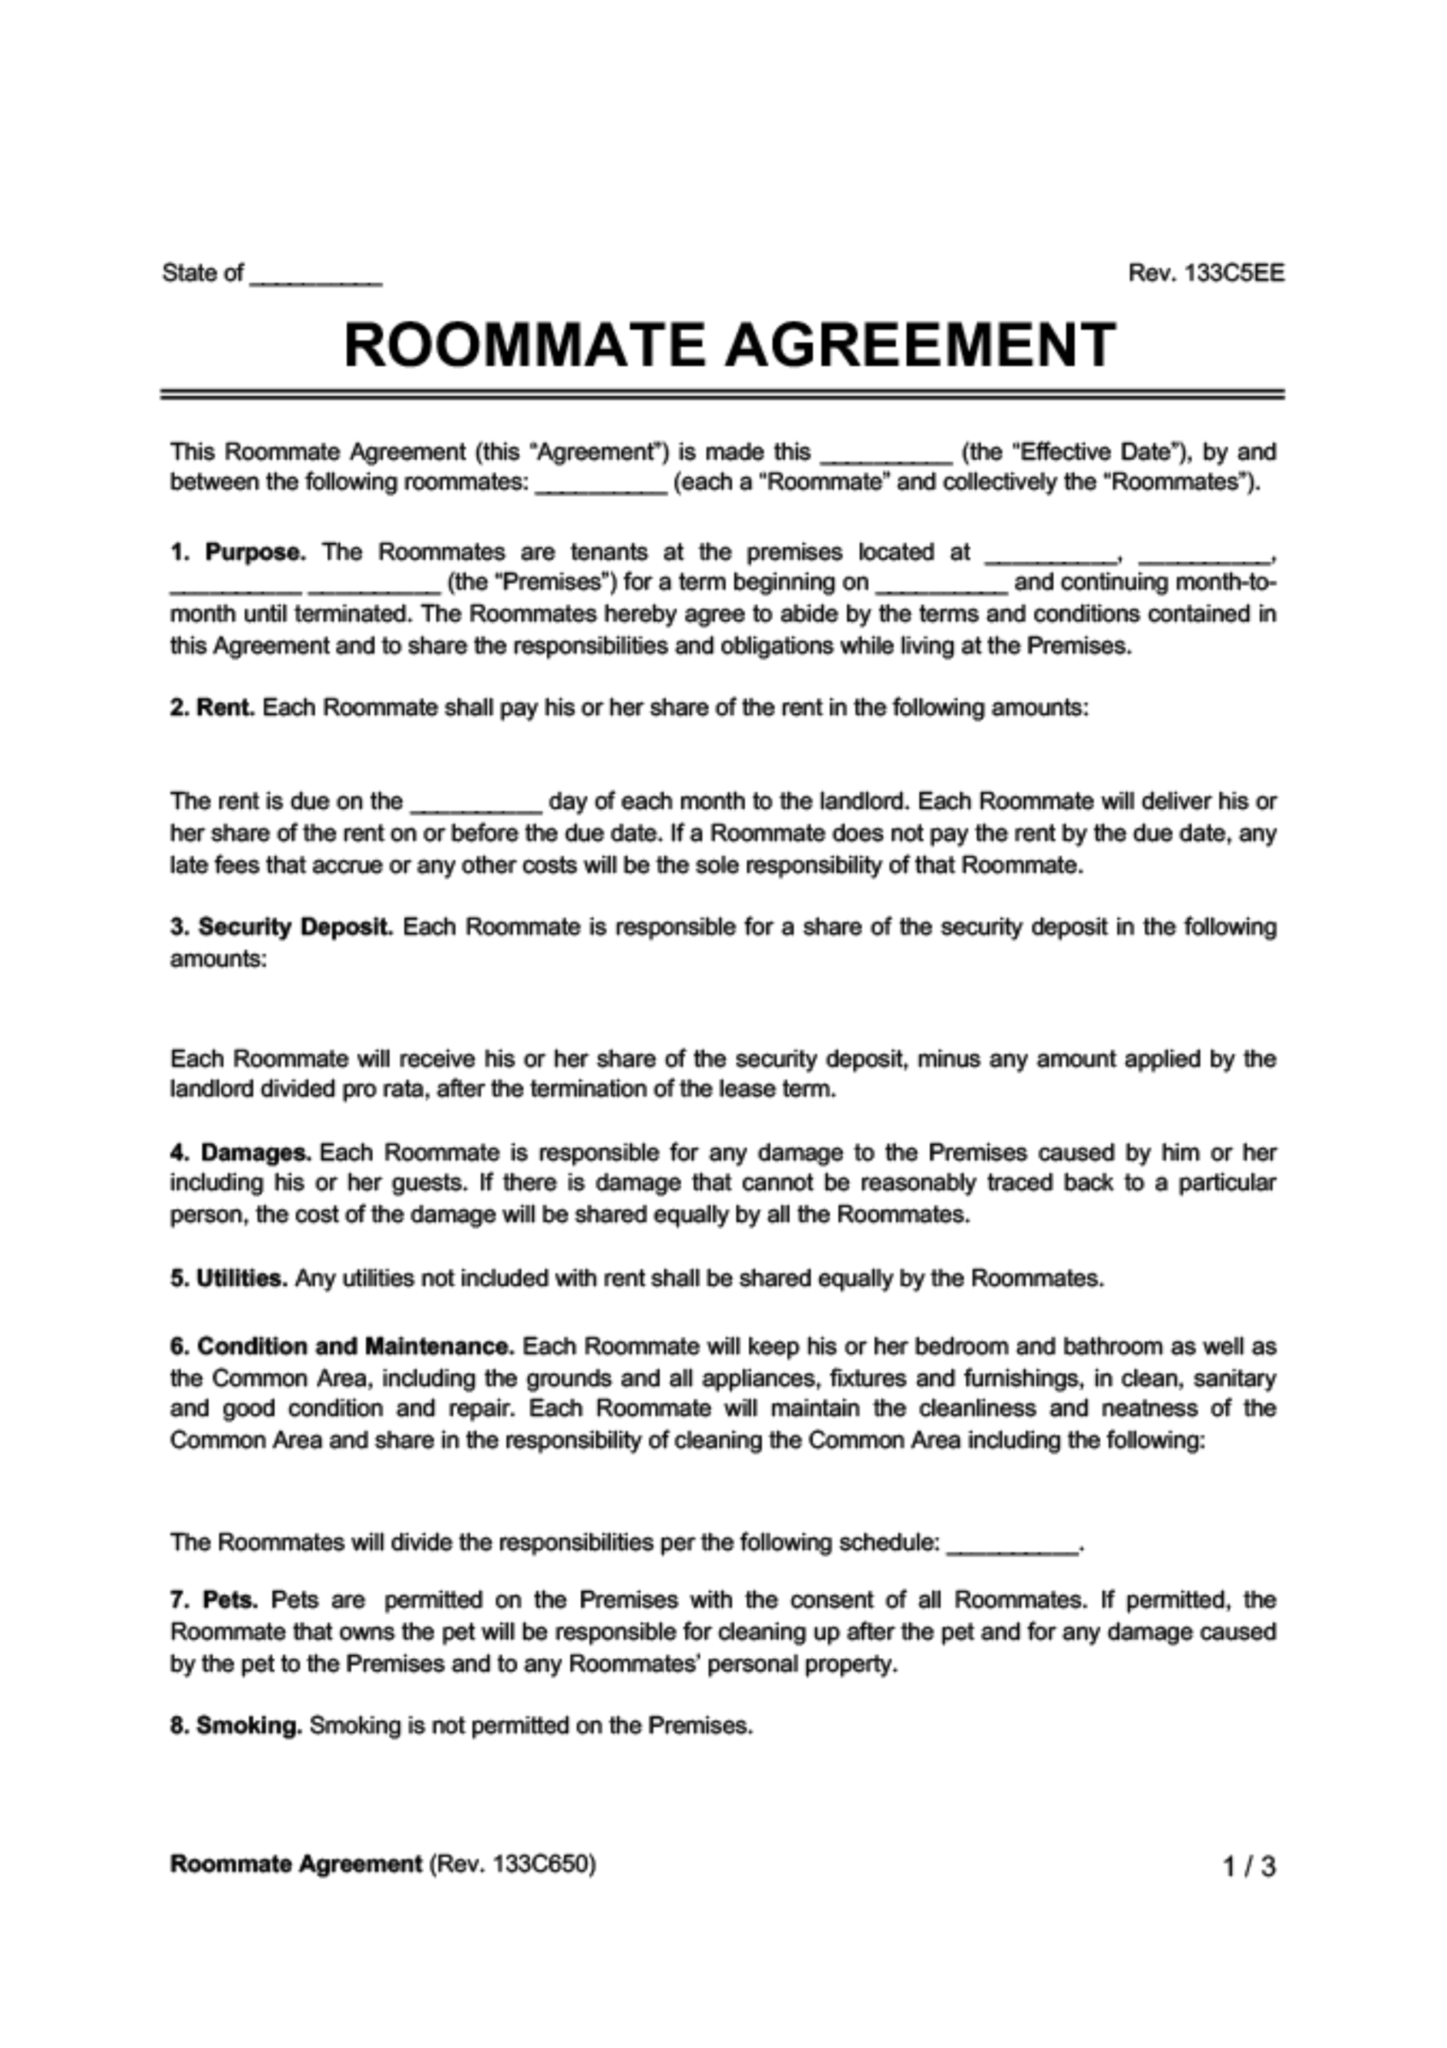 Roommate Agreement 1447x2048 